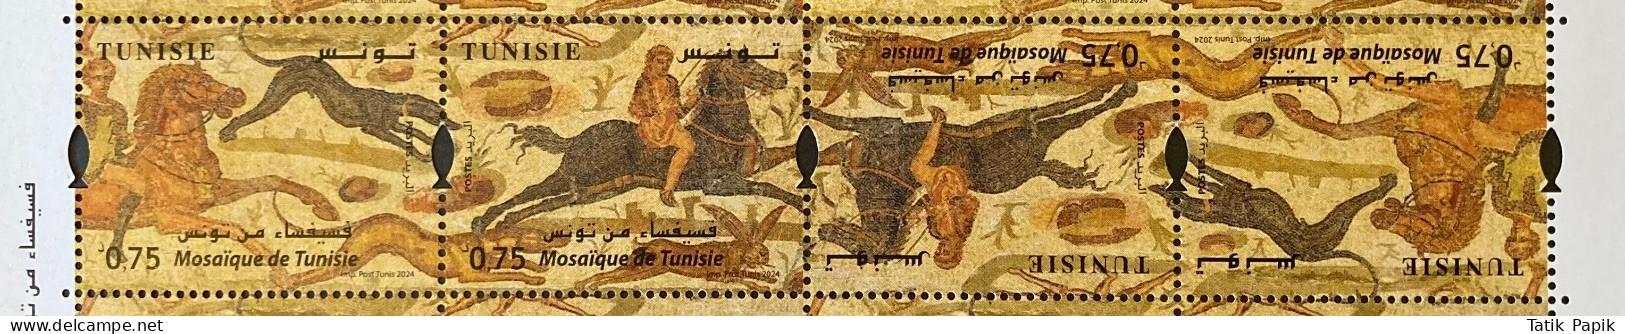 2024 Tunisie Tunisia Mosaic Horse Dog 2 Pairs Head To Tail Cheval Chevalin Jockey   MNH New - Tunisia